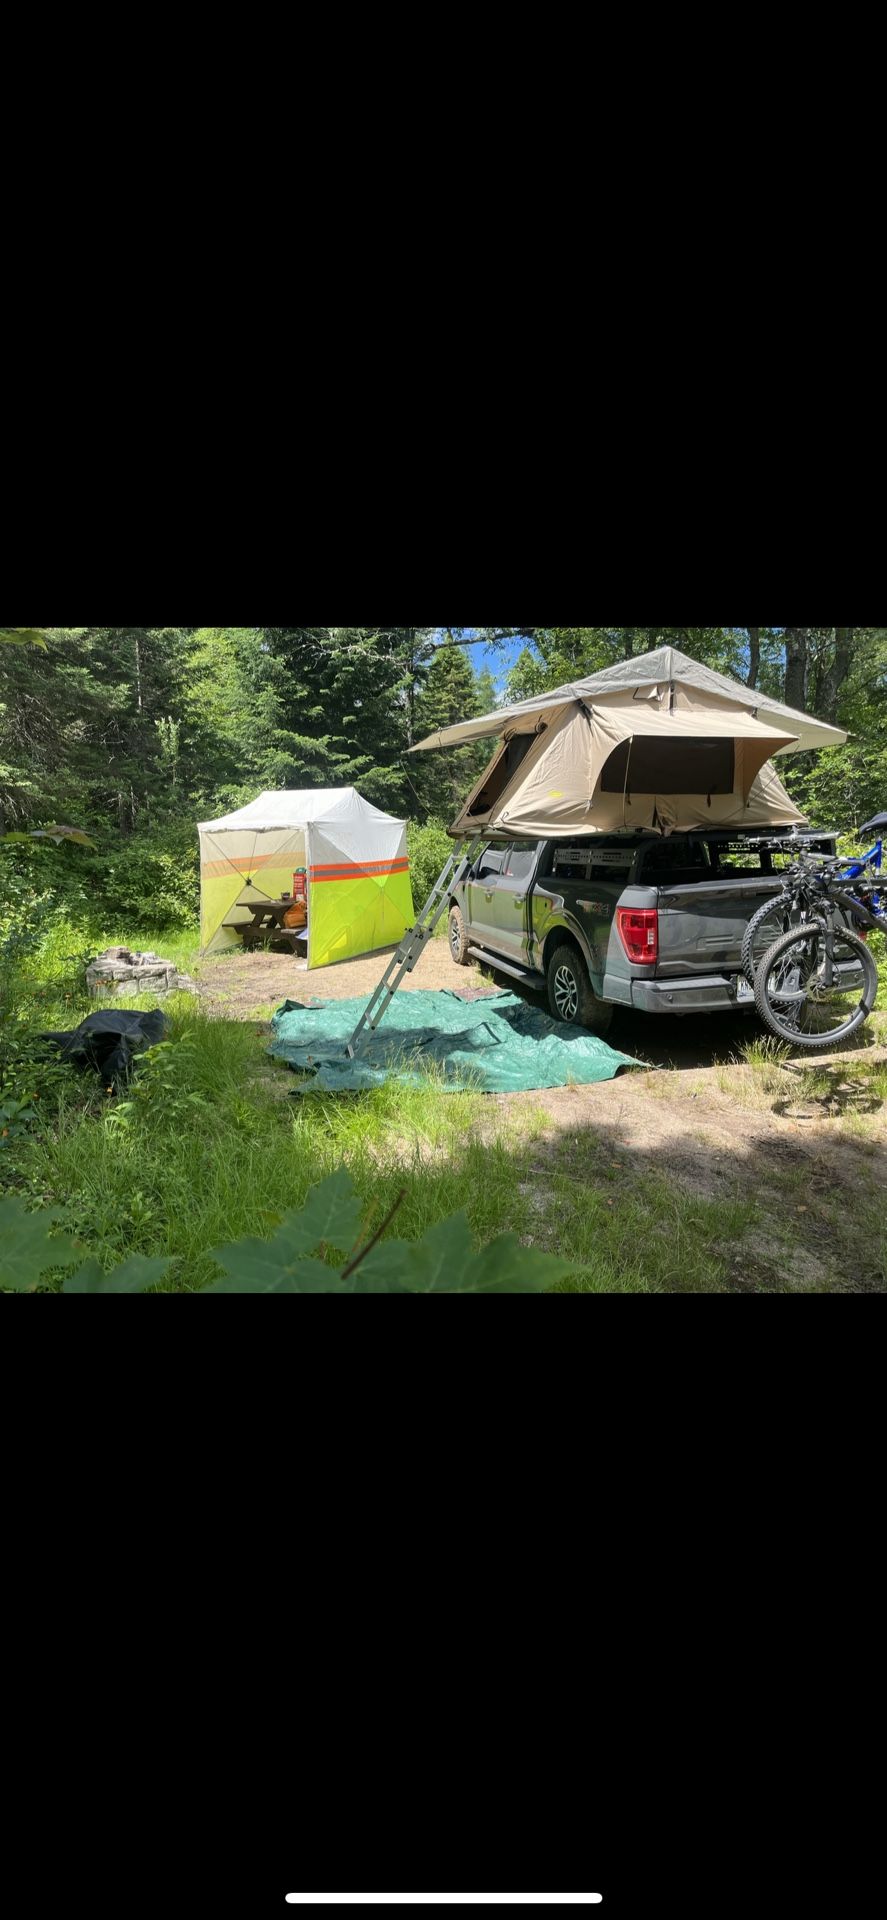 Smittybilt Tent And Fishbone Camper Rack 